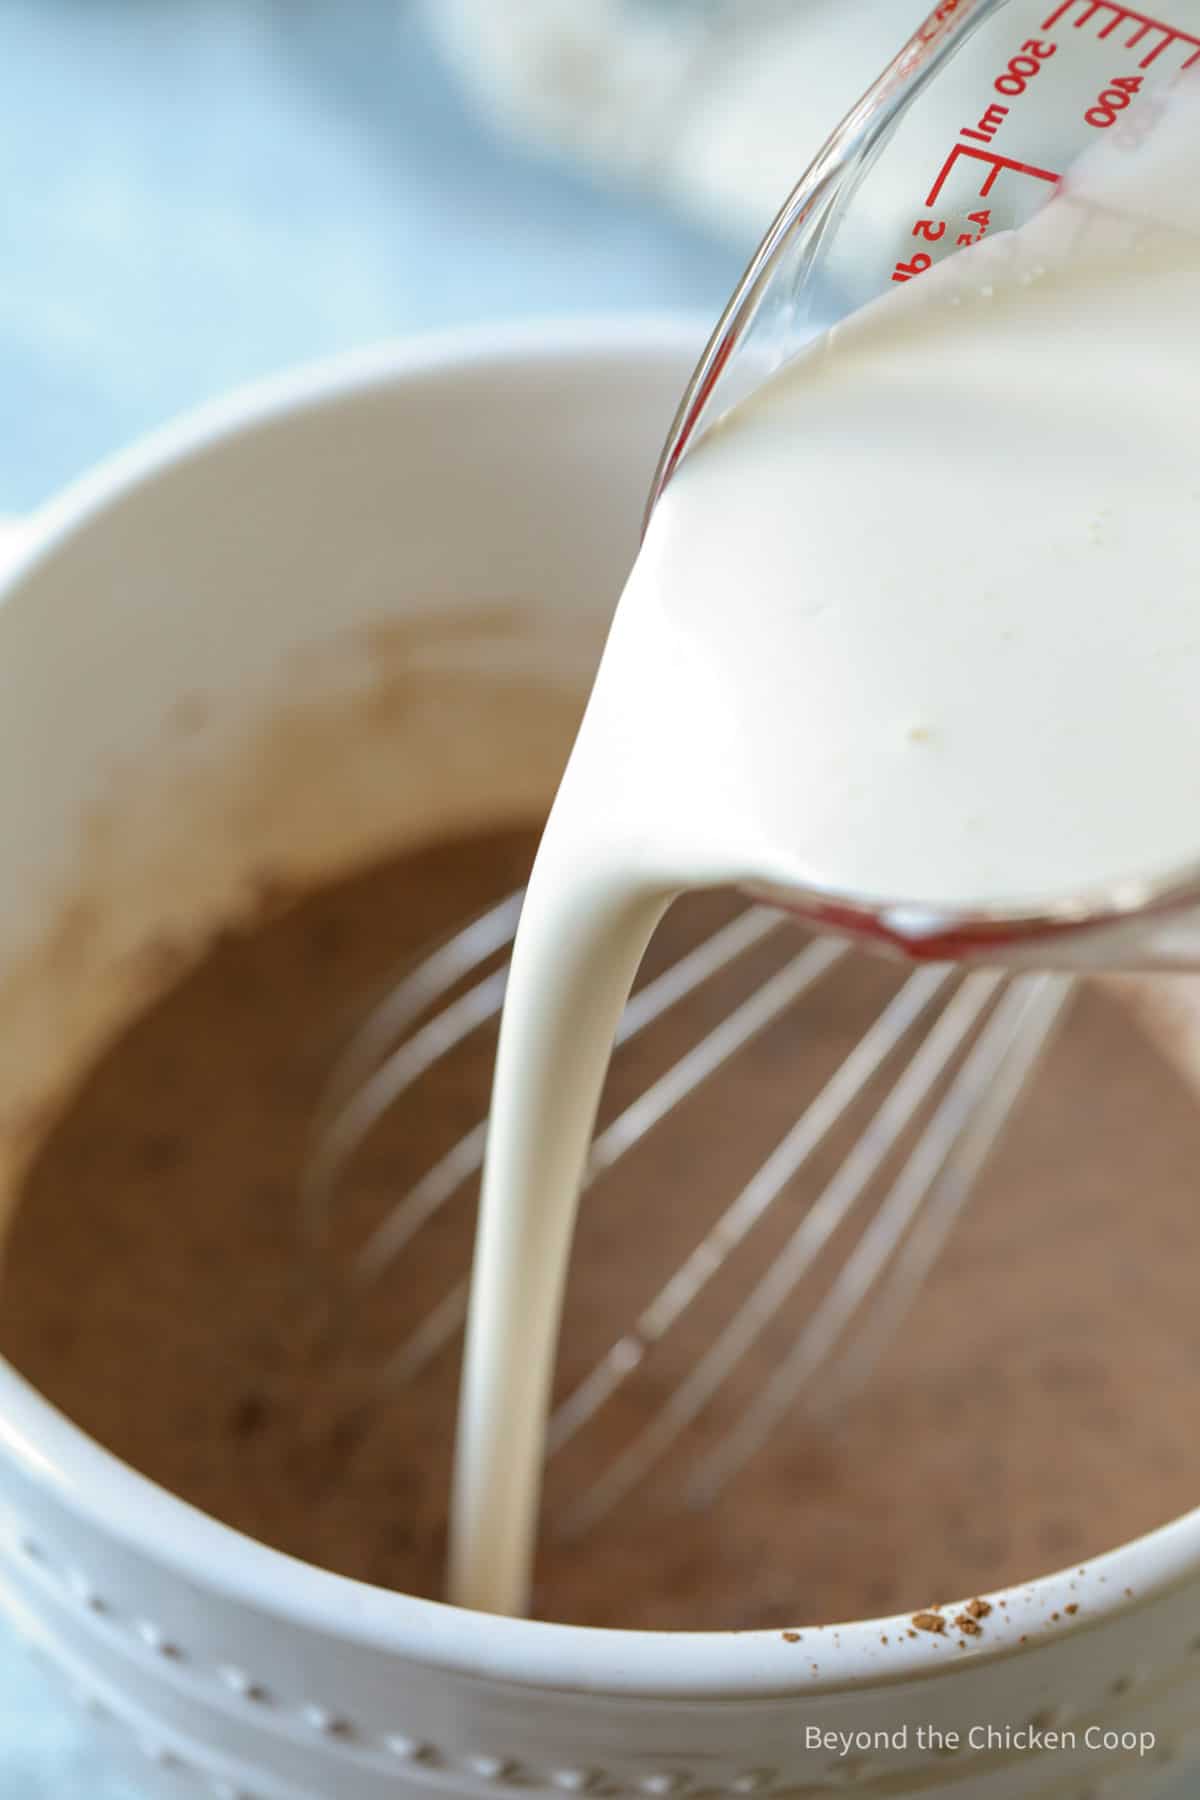 Adding cream to chocolate milk. 